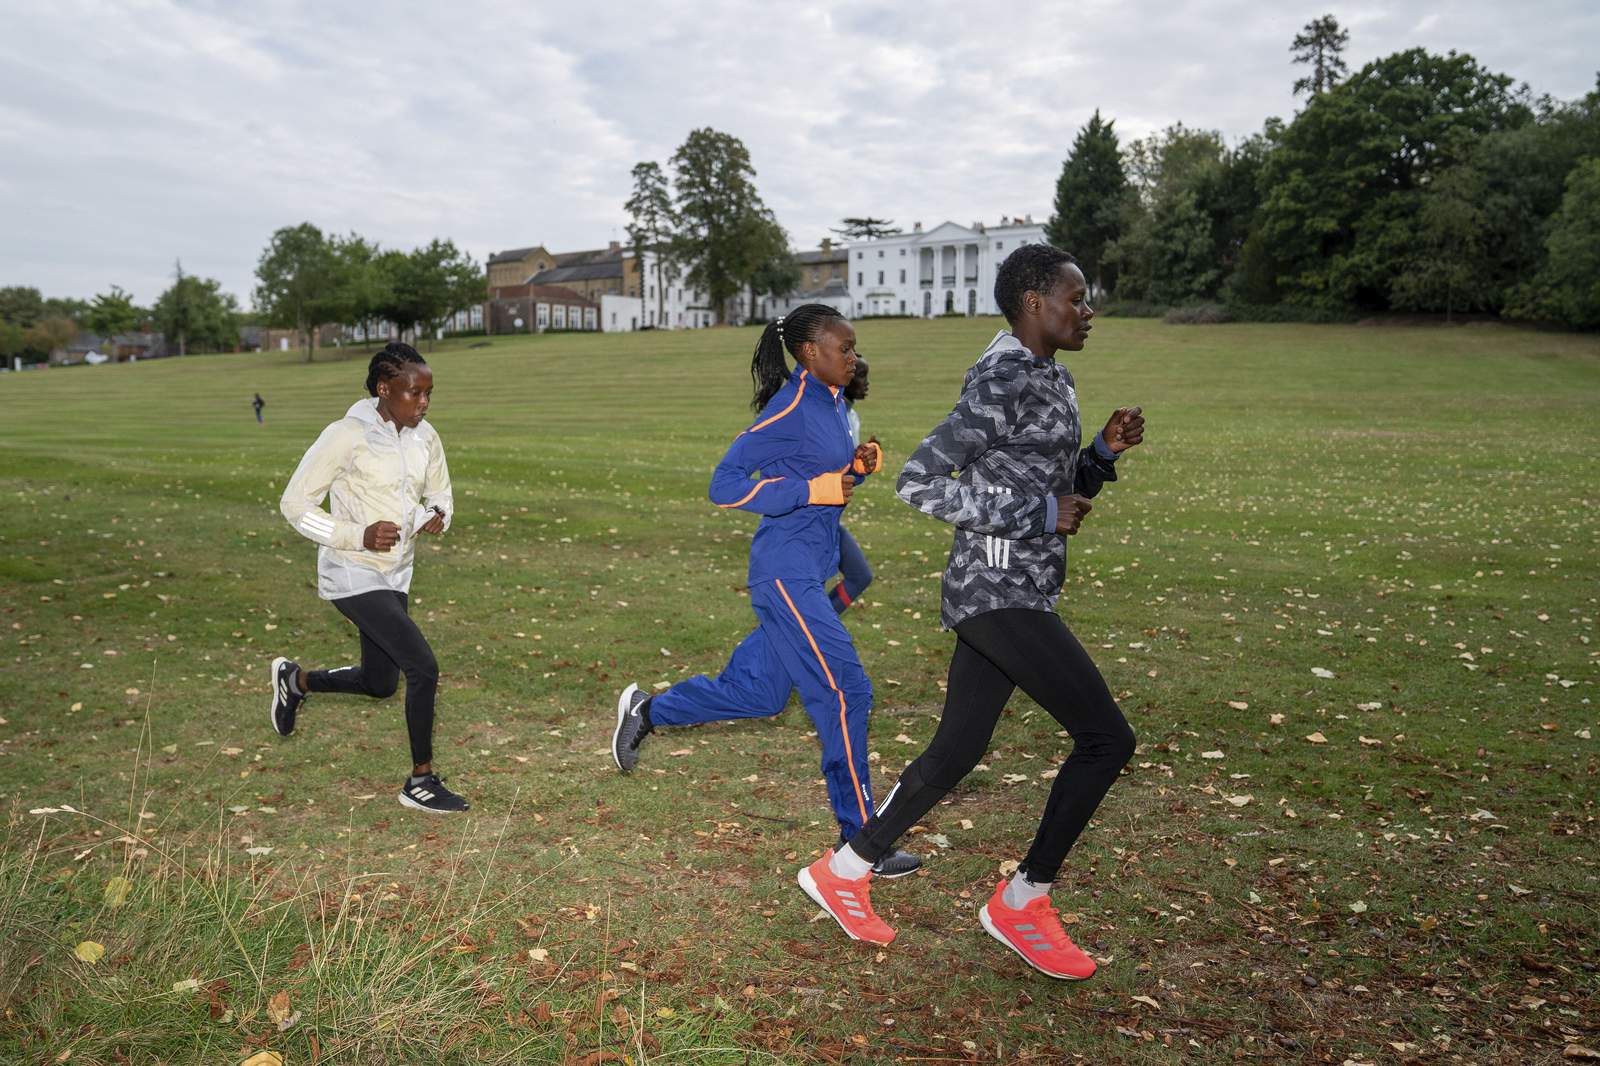 Elite women cite training limits in London Marathon buildup